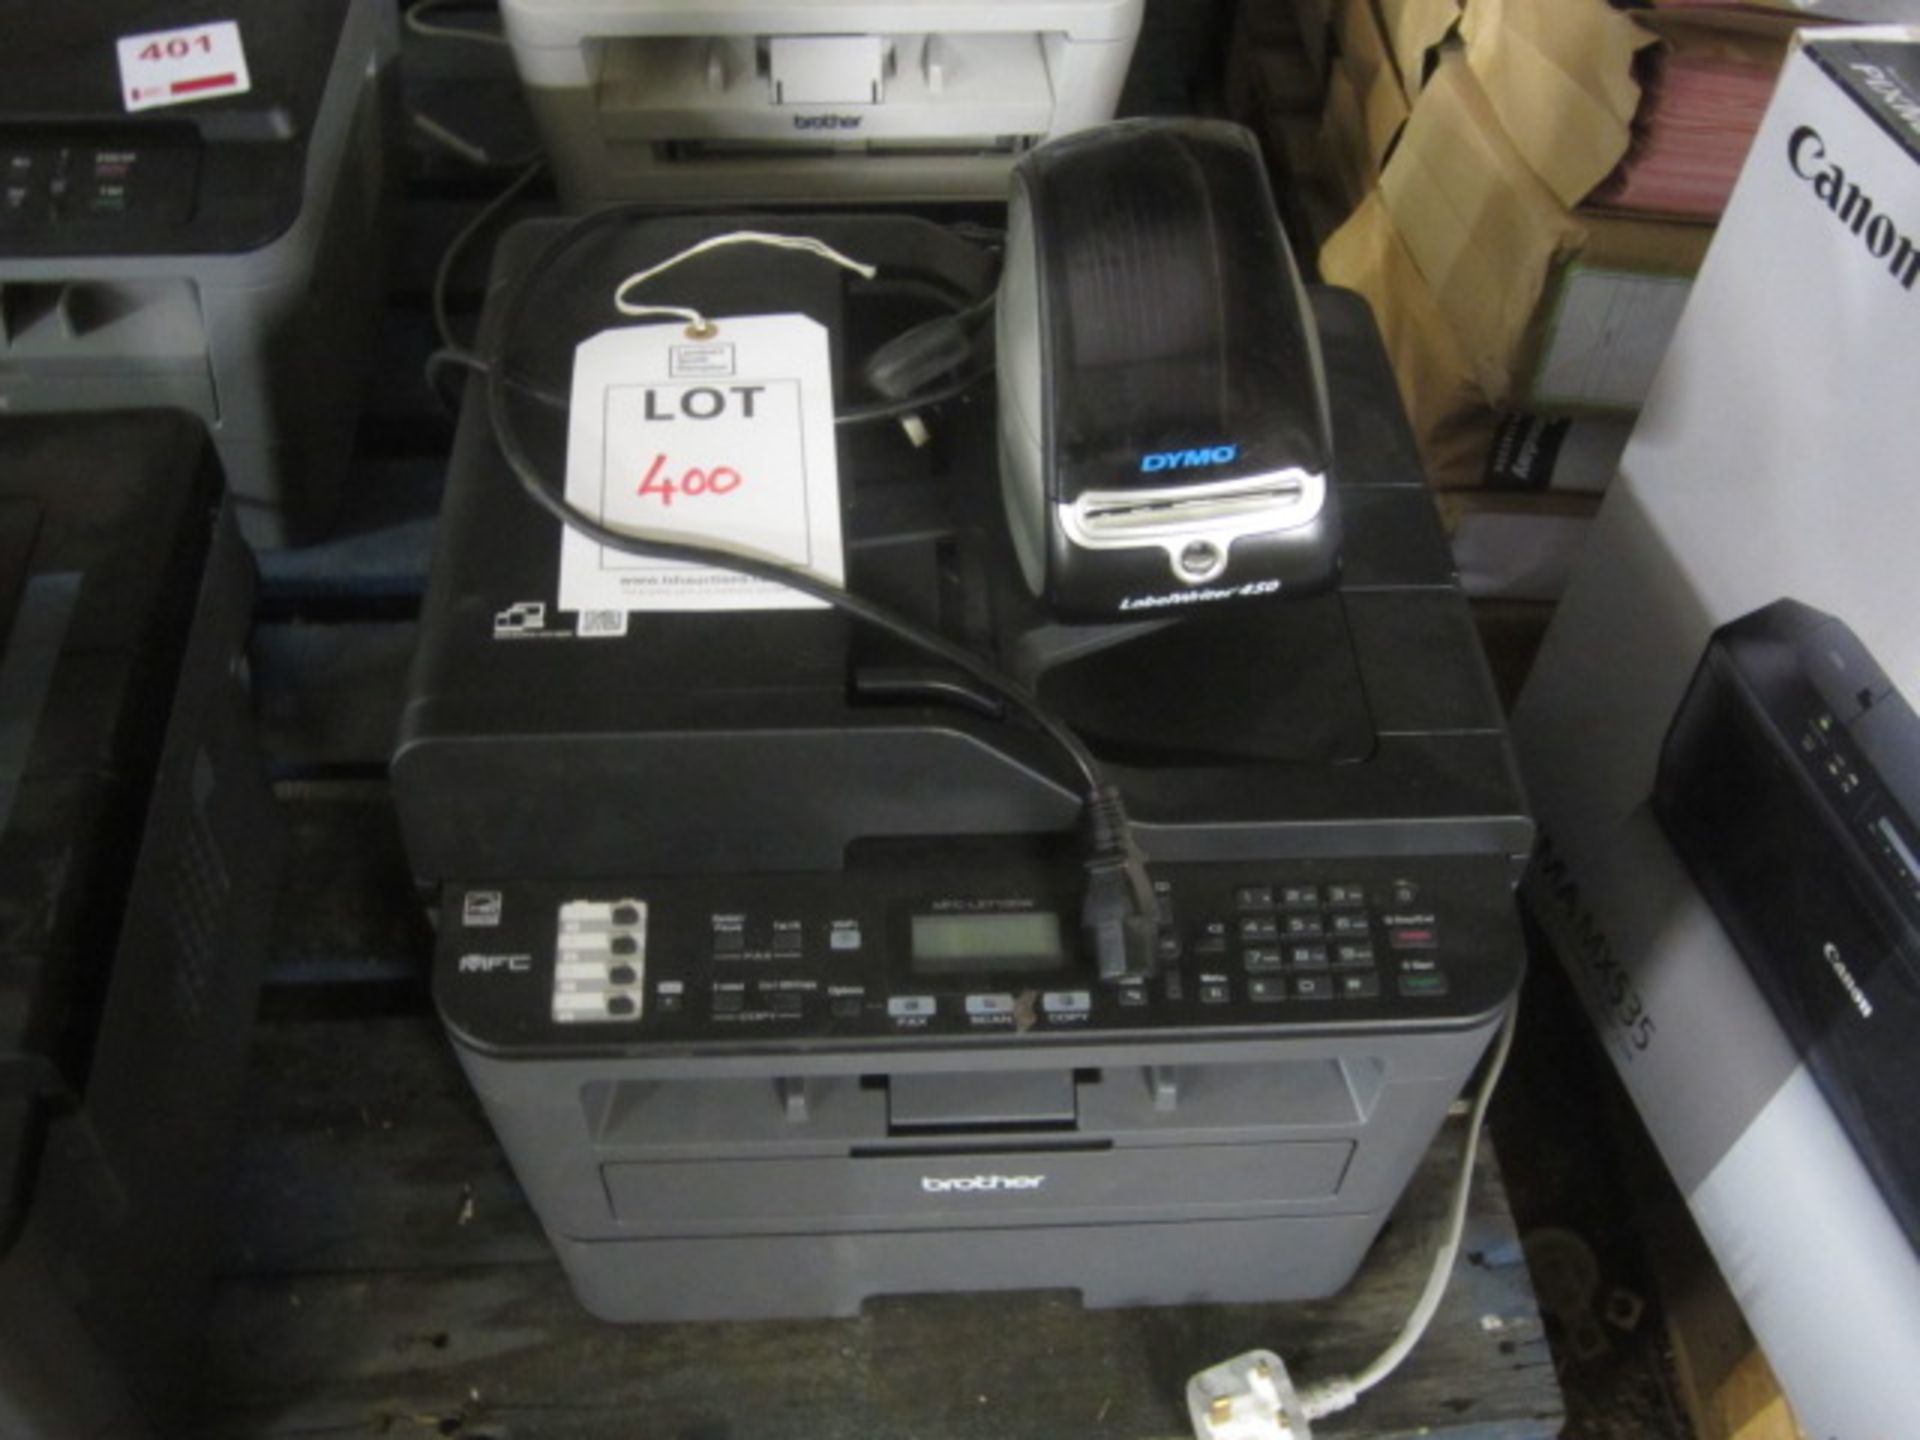 Brother MFC-L271 DDW printer,** Located at Stoneford Farm, Steamalong Road, Isle Abbotts, Nr Taunton